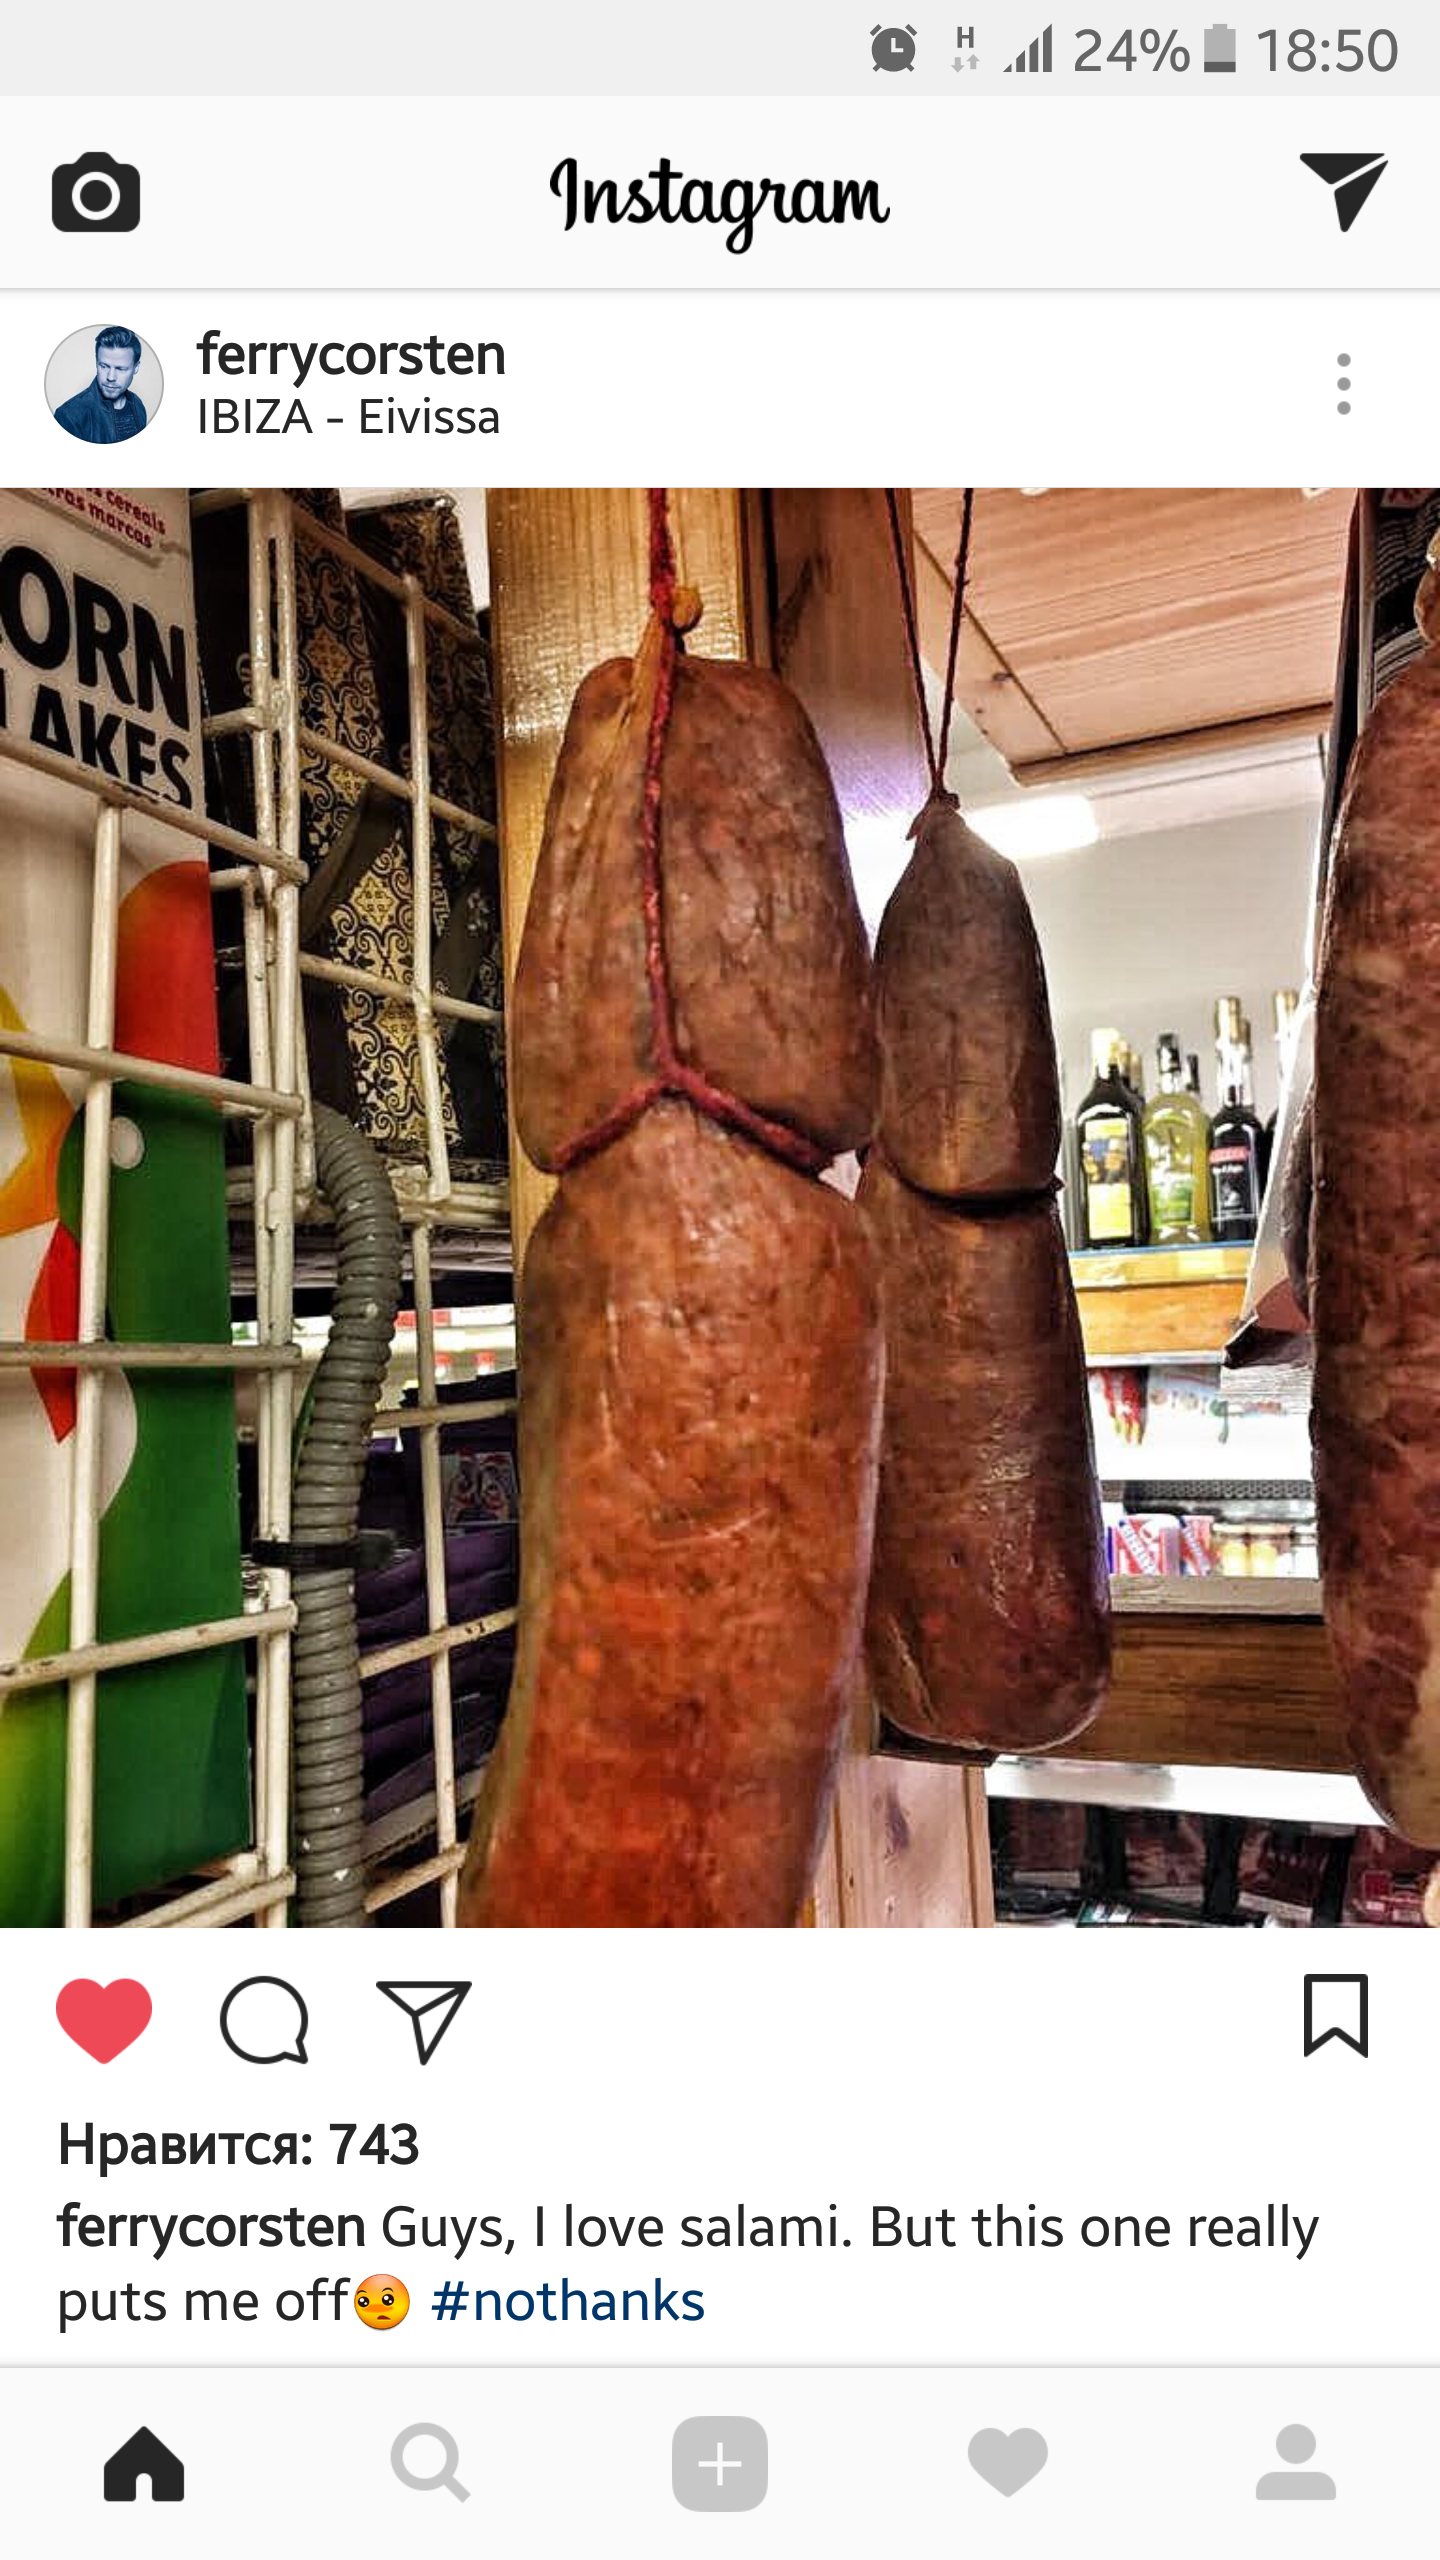 Who loves salami? - Salami, Ferry Corsten, Instagram